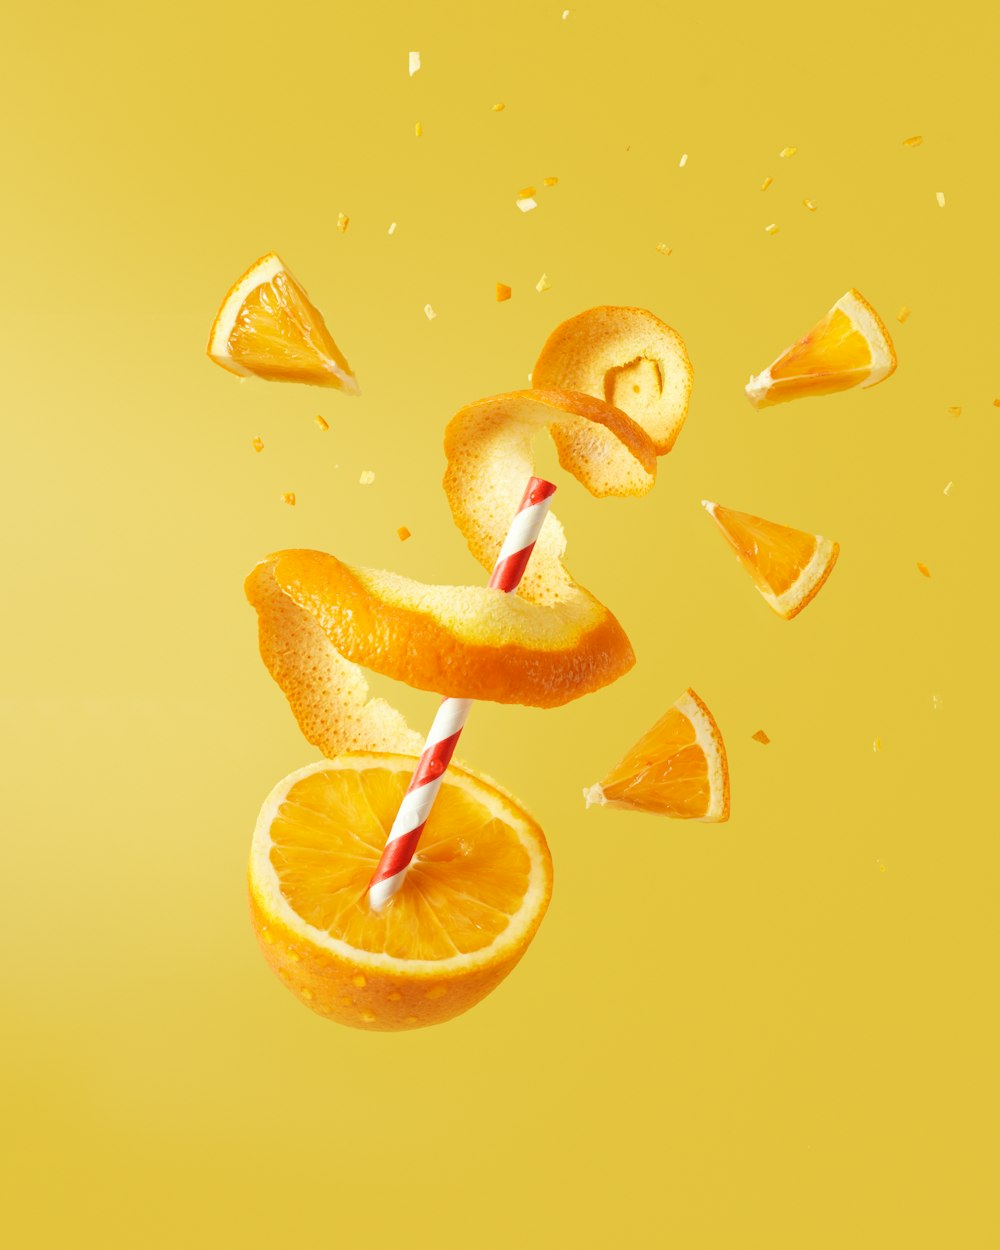 fruta laranja fatiada na superfície amarela